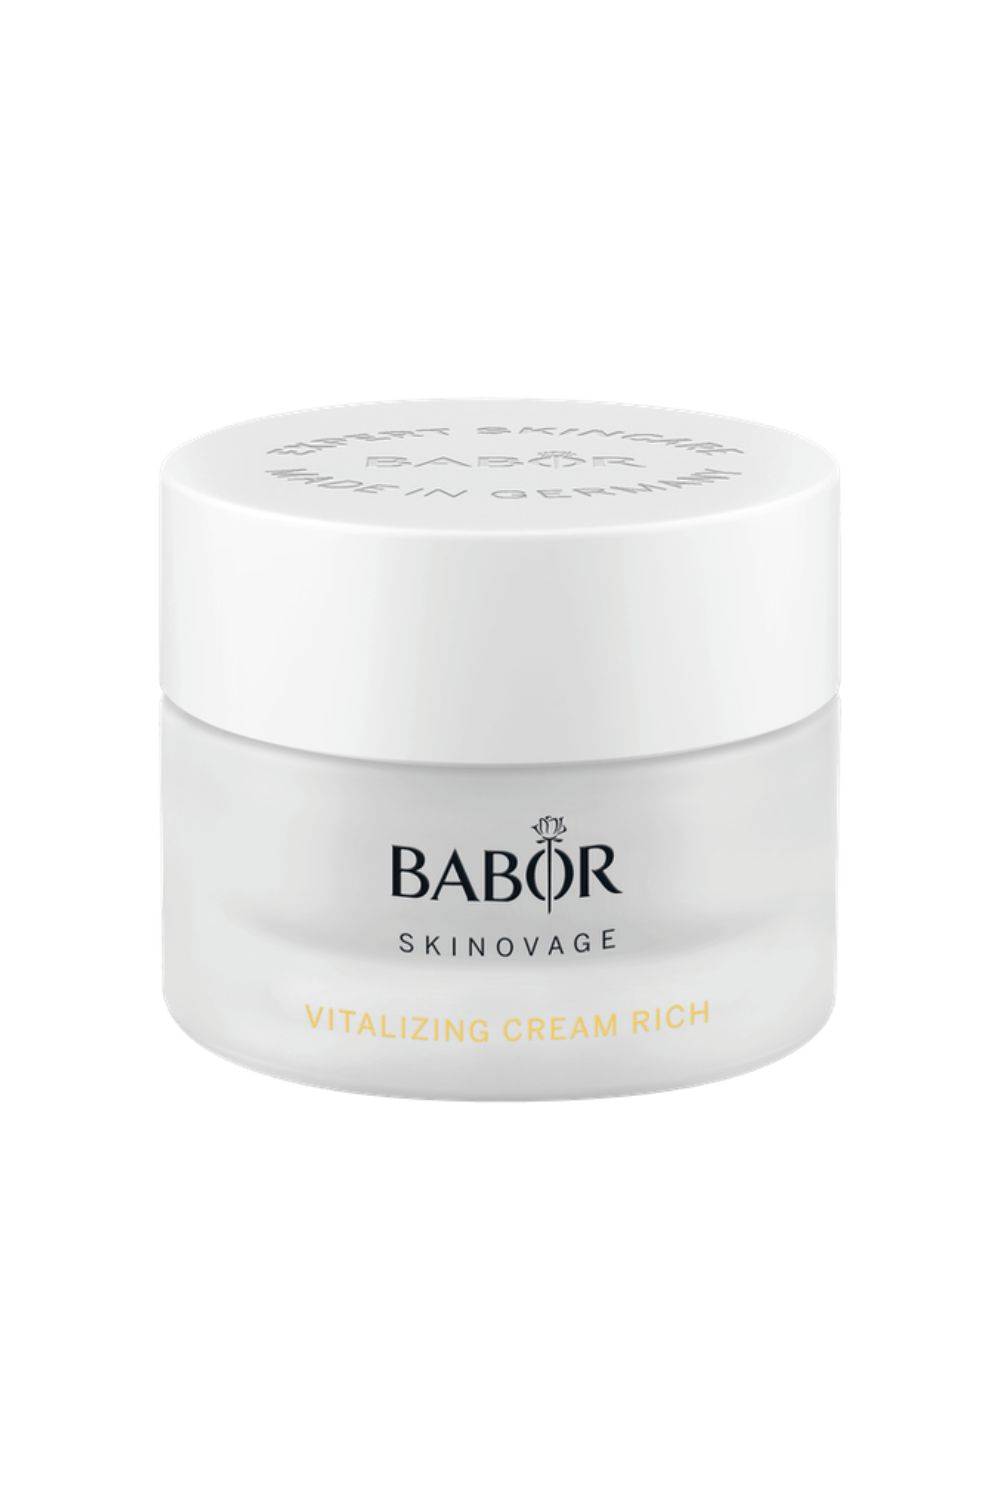 BABOR SKINOVAGE Vitalizing Cream Rich